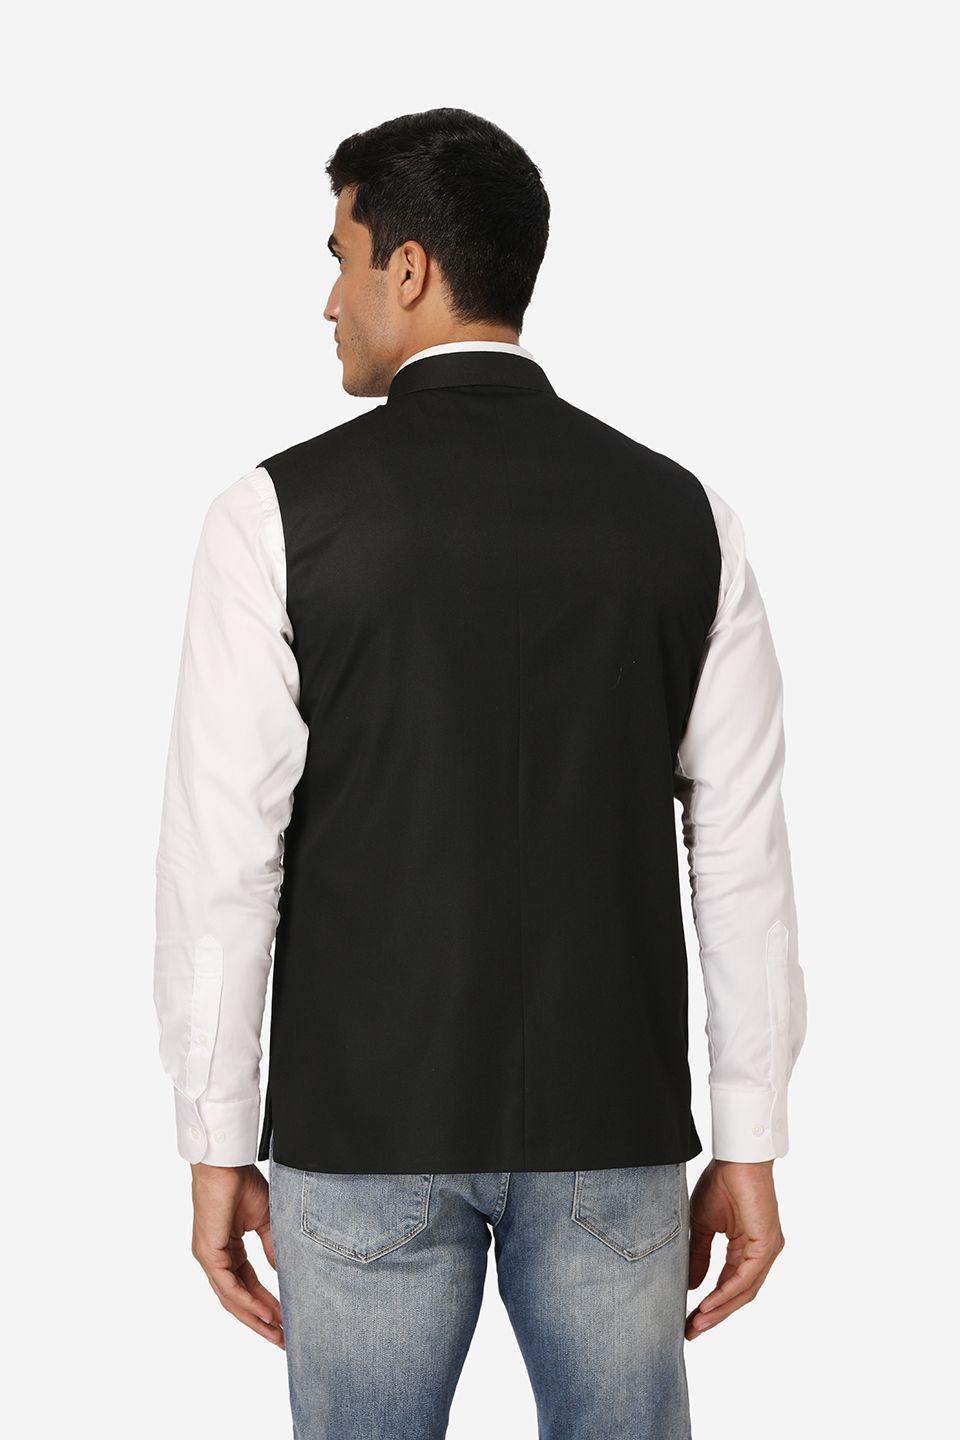 Wintage Men's Poly Cotton Festive and Casual Nehru Jacket Vest Waistcoat : Black